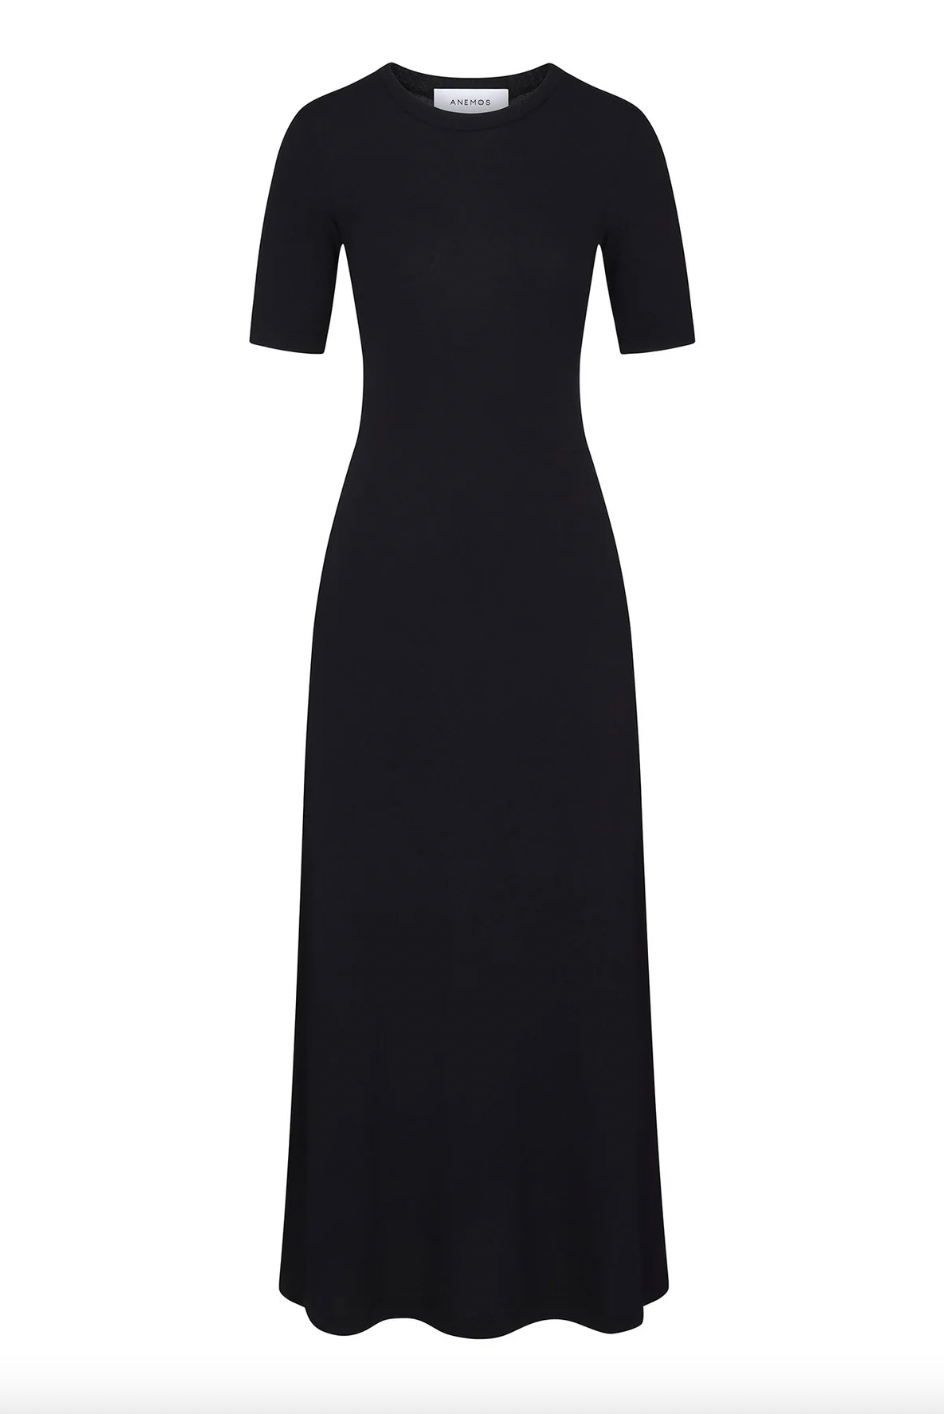 Product Image for Short Sleeve Knit Midi Dress, Black